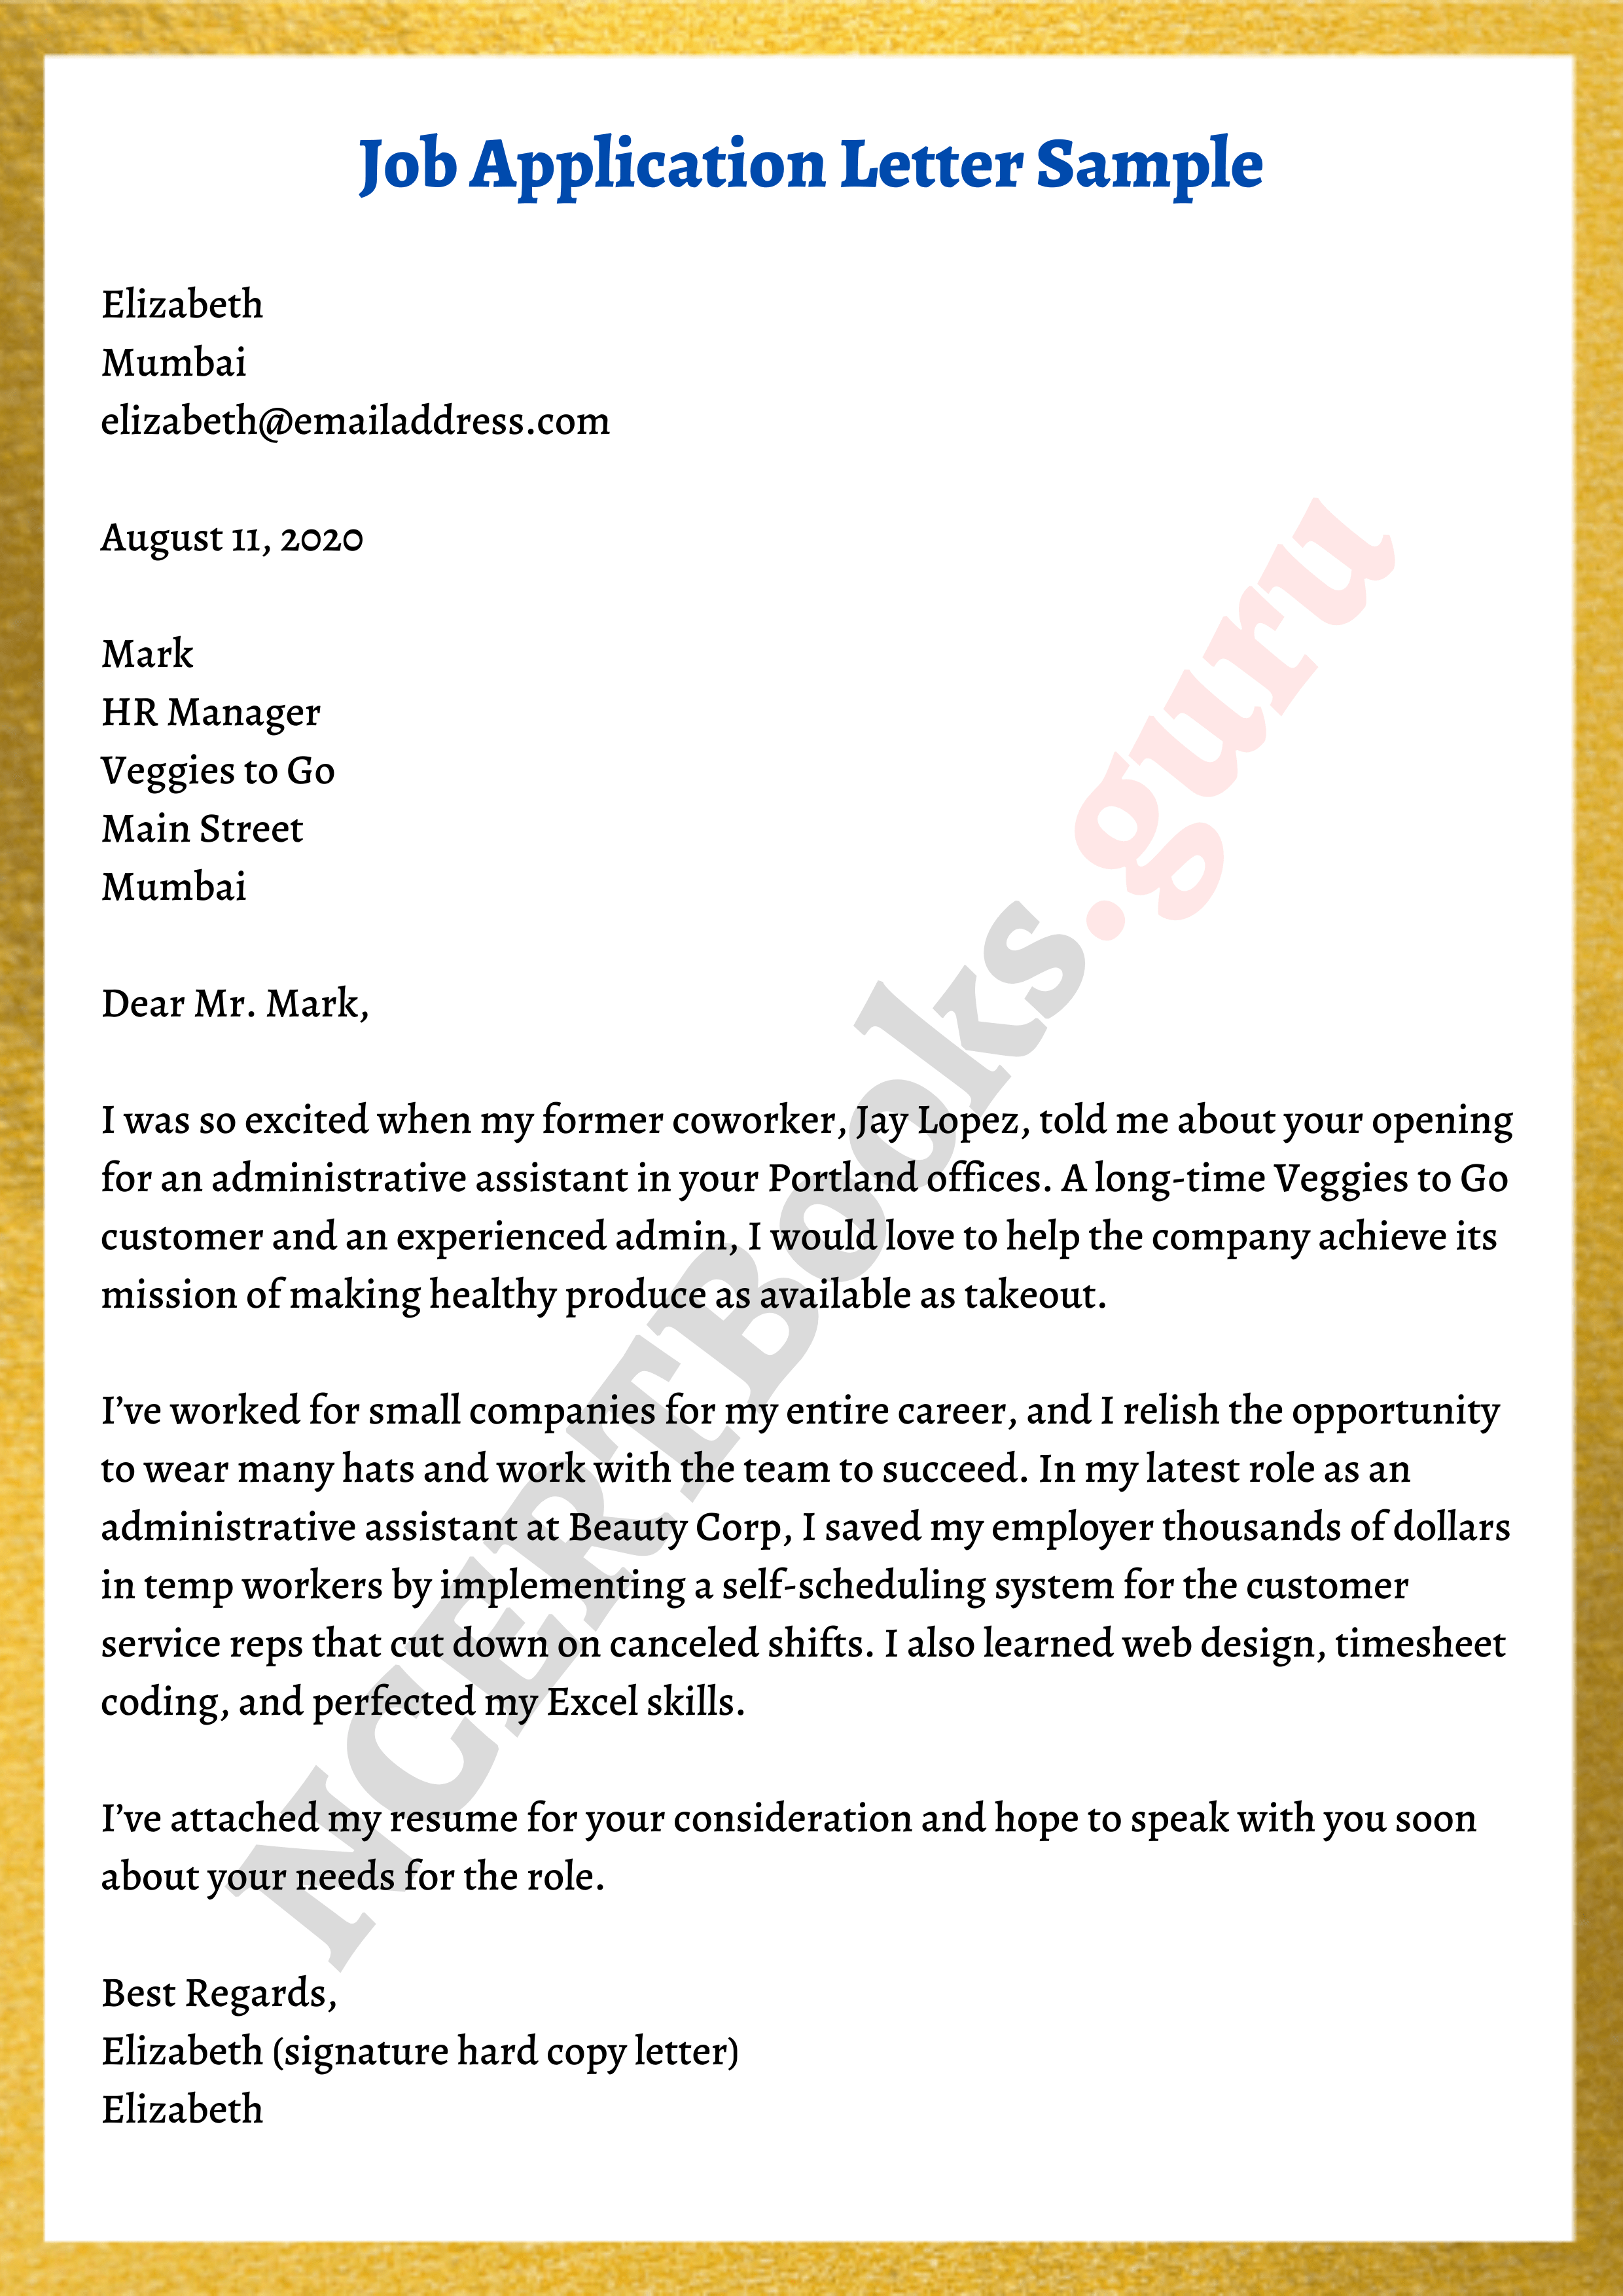 job application letters format